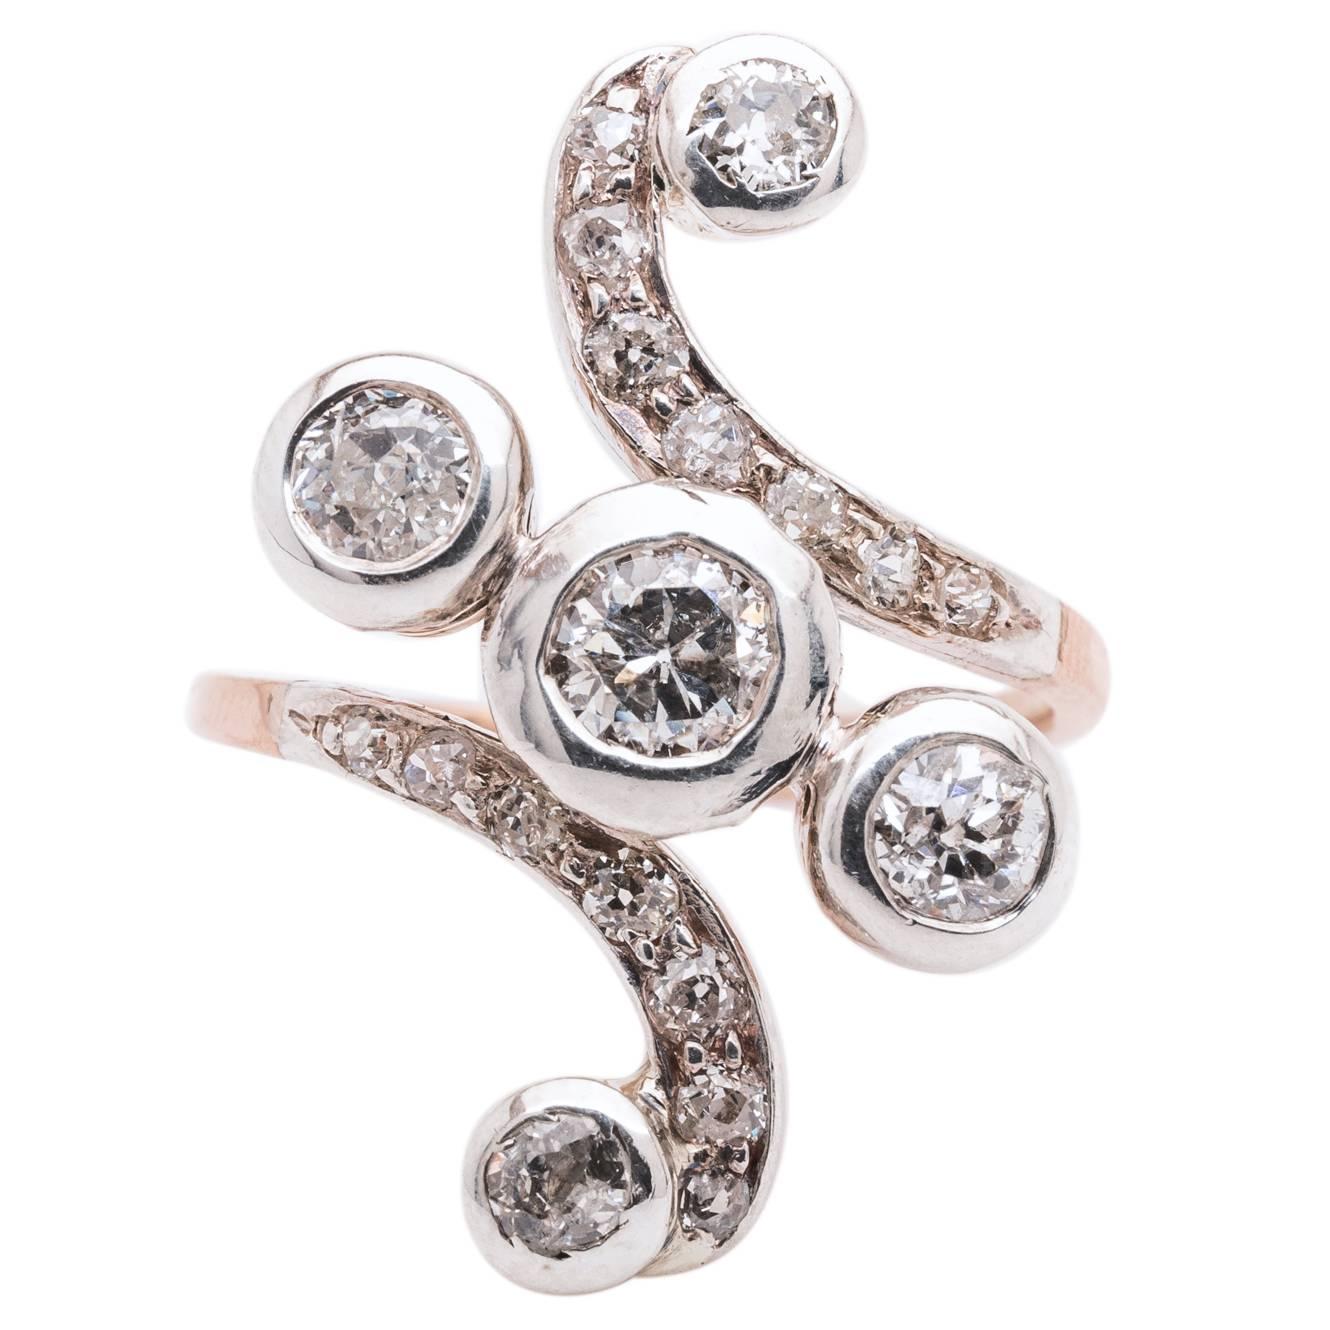 Fantastic Victorian 1.72 Carat Diamond Gold Platinum Swirl Ring